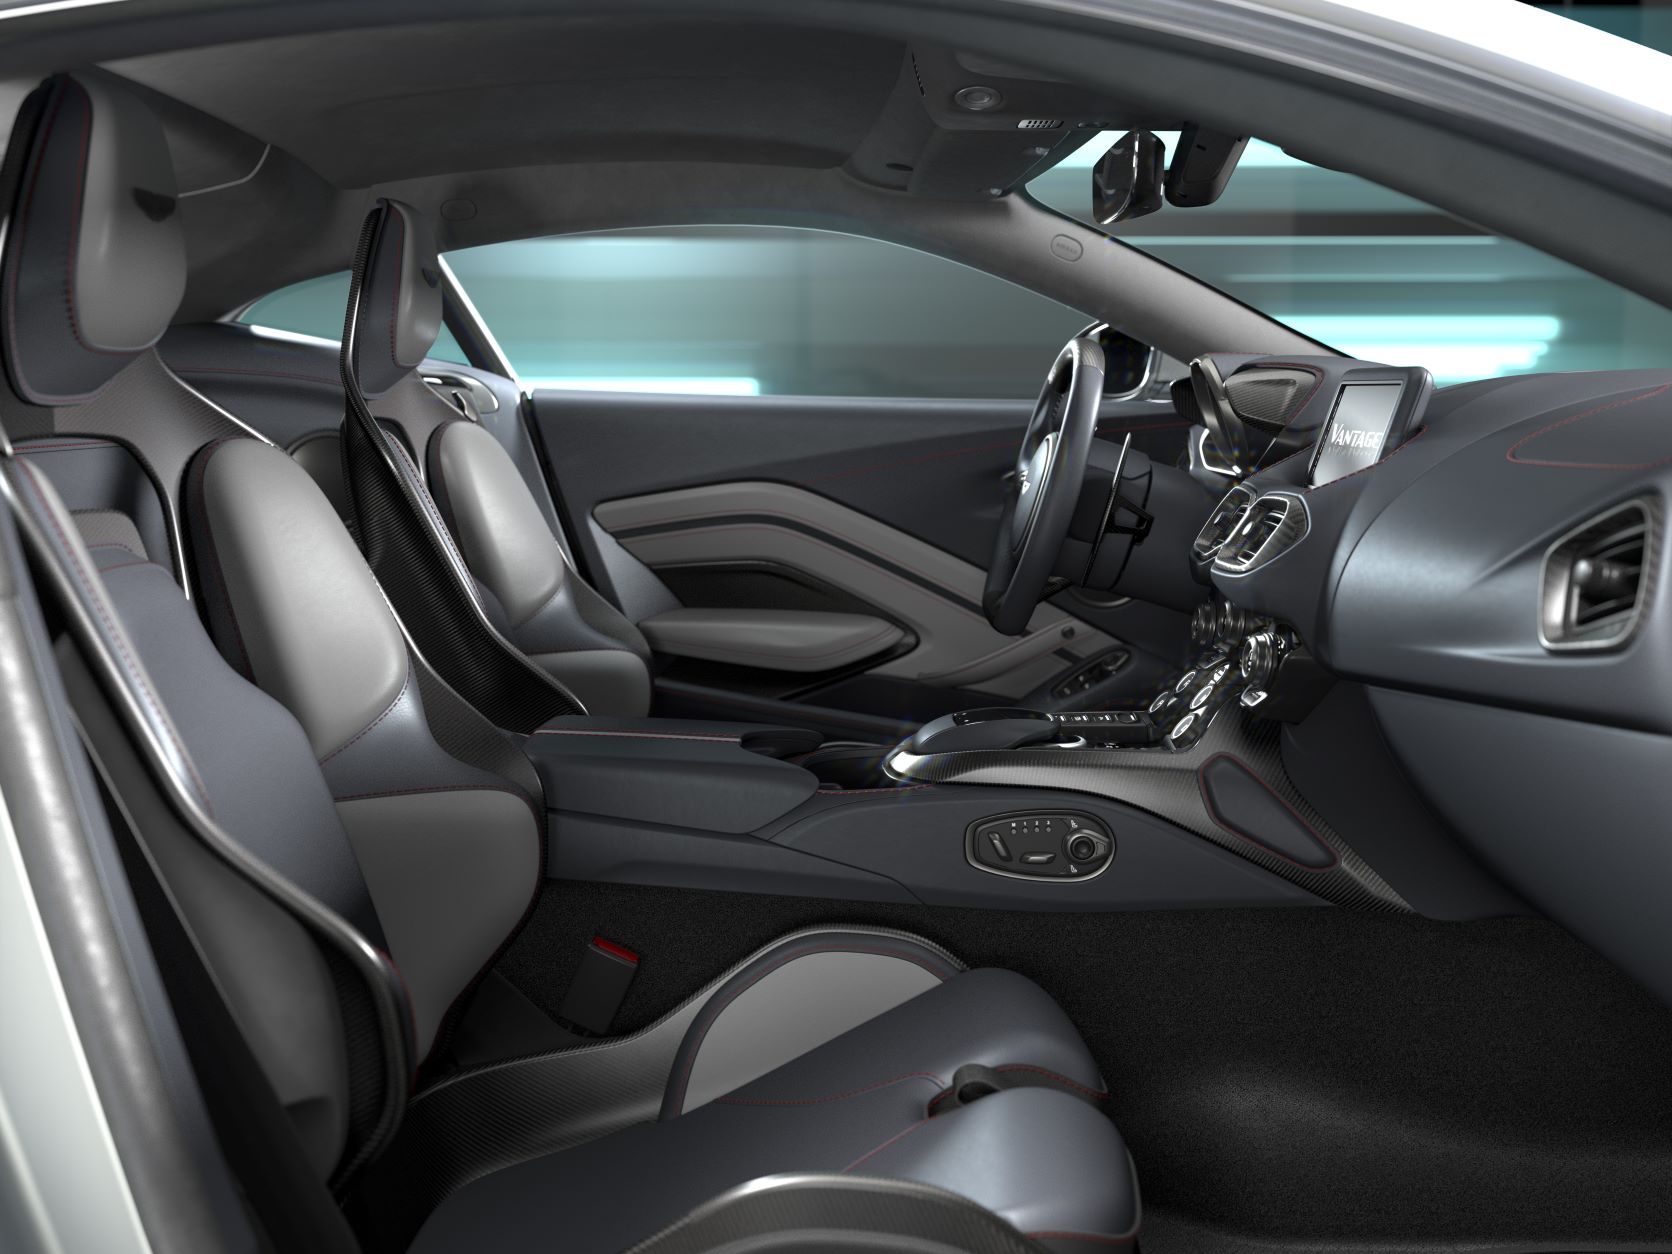 Interior of the new Aston Martin V12 Vantage